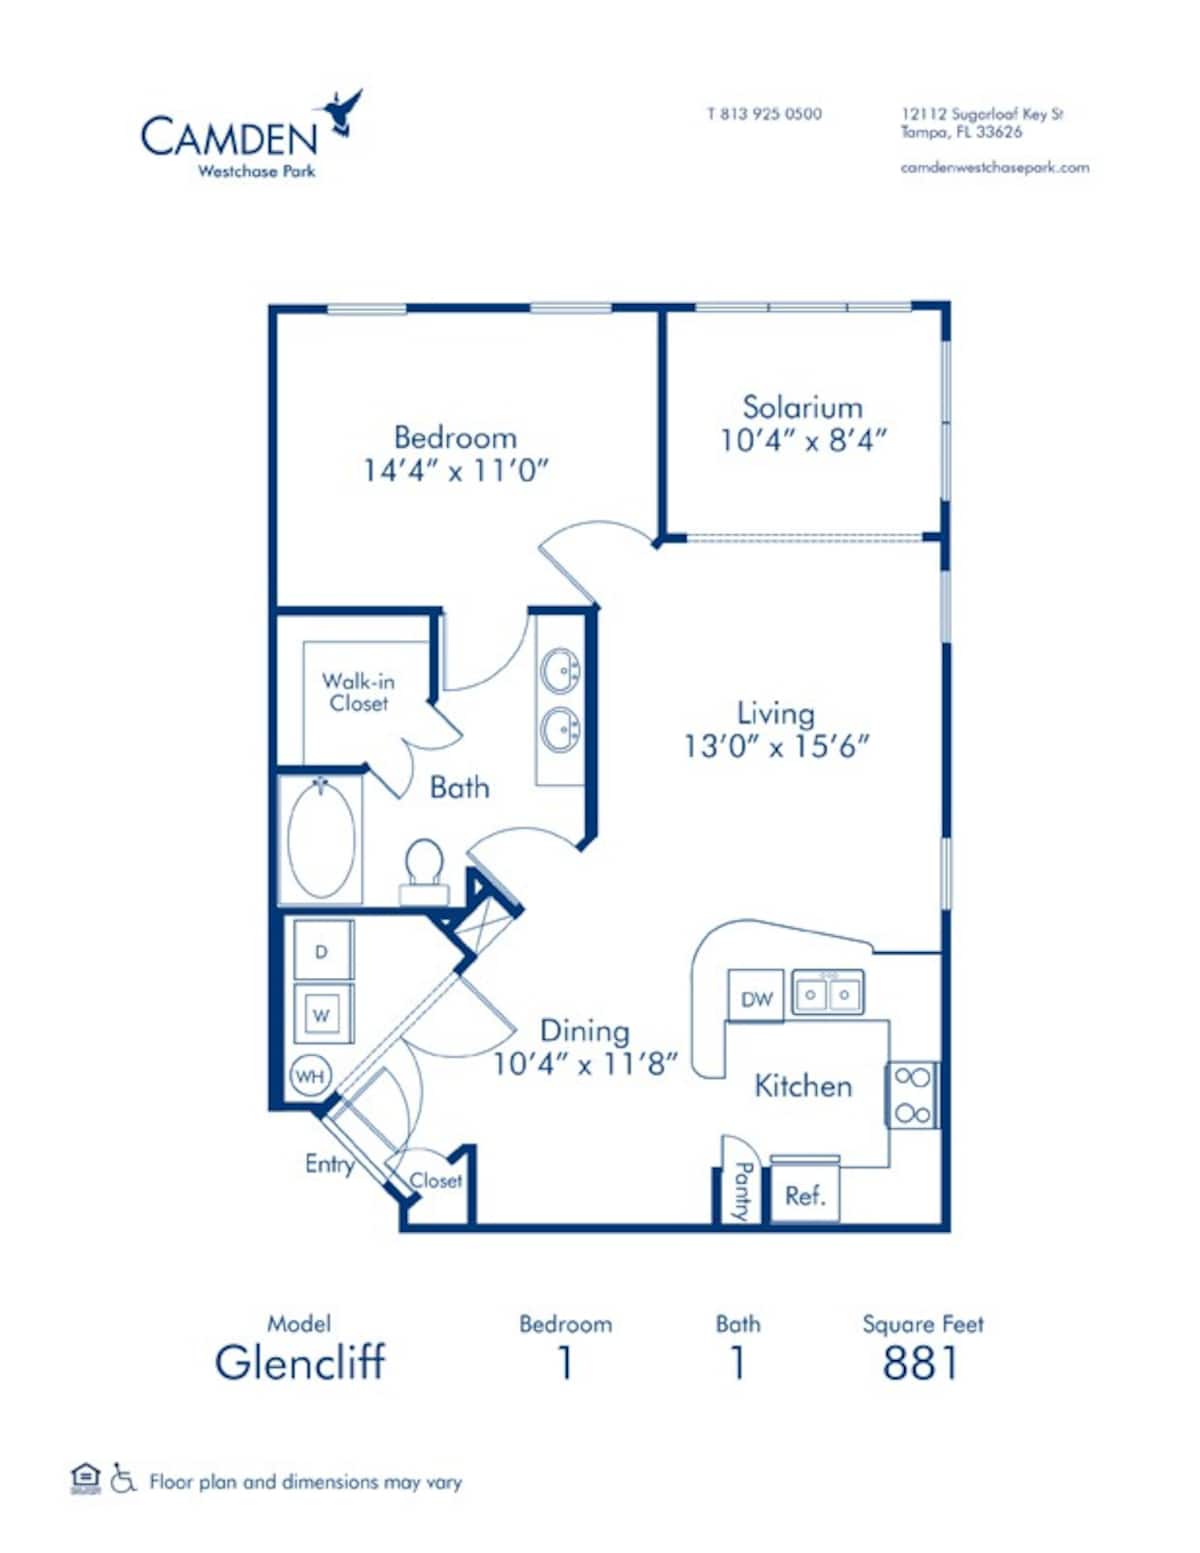 Floorplan diagram for Glencliff, showing 1 bedroom